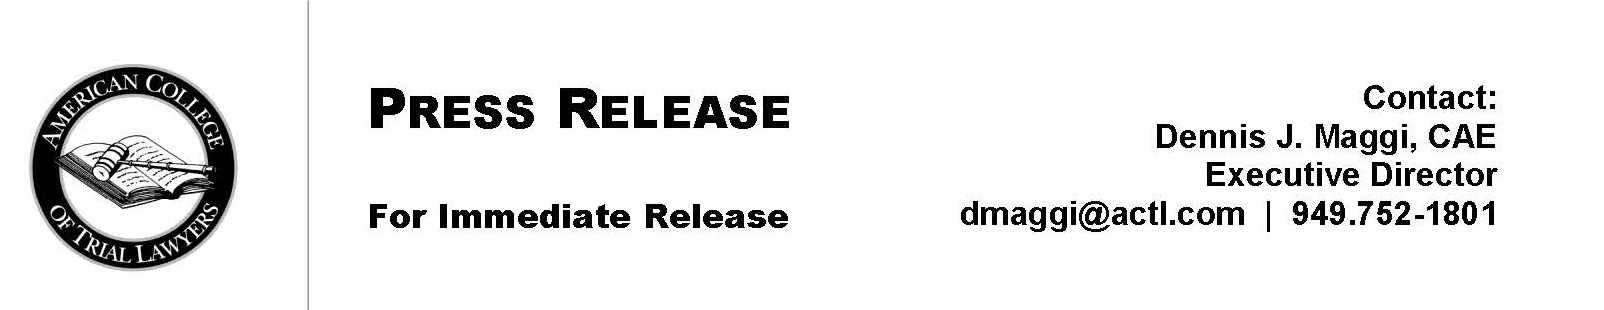 ACTL press release header